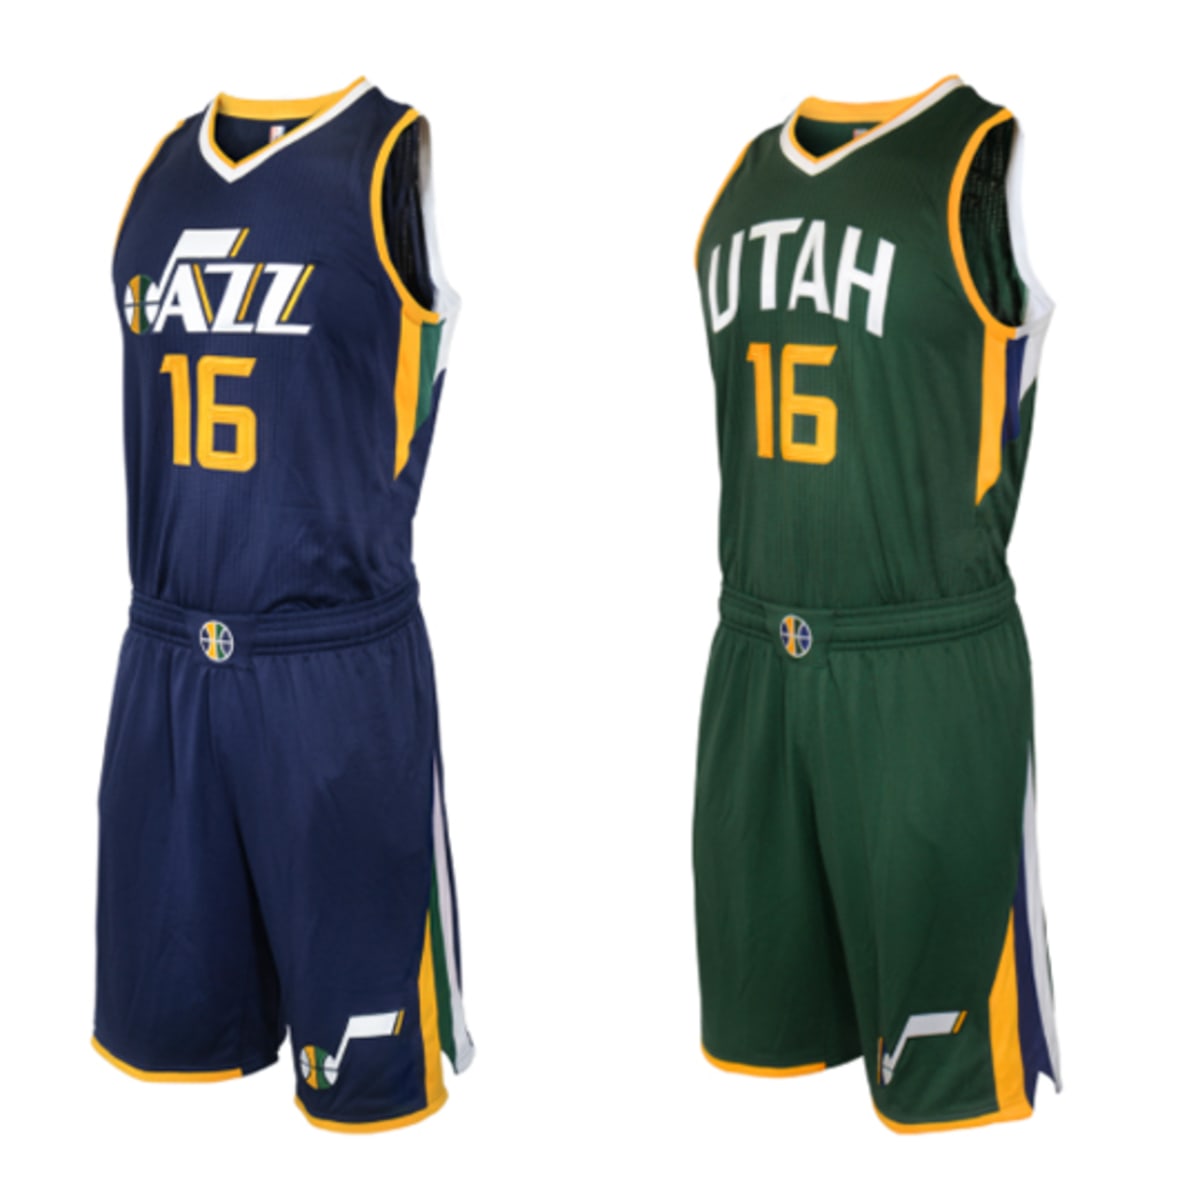 utah jazz new uniforms